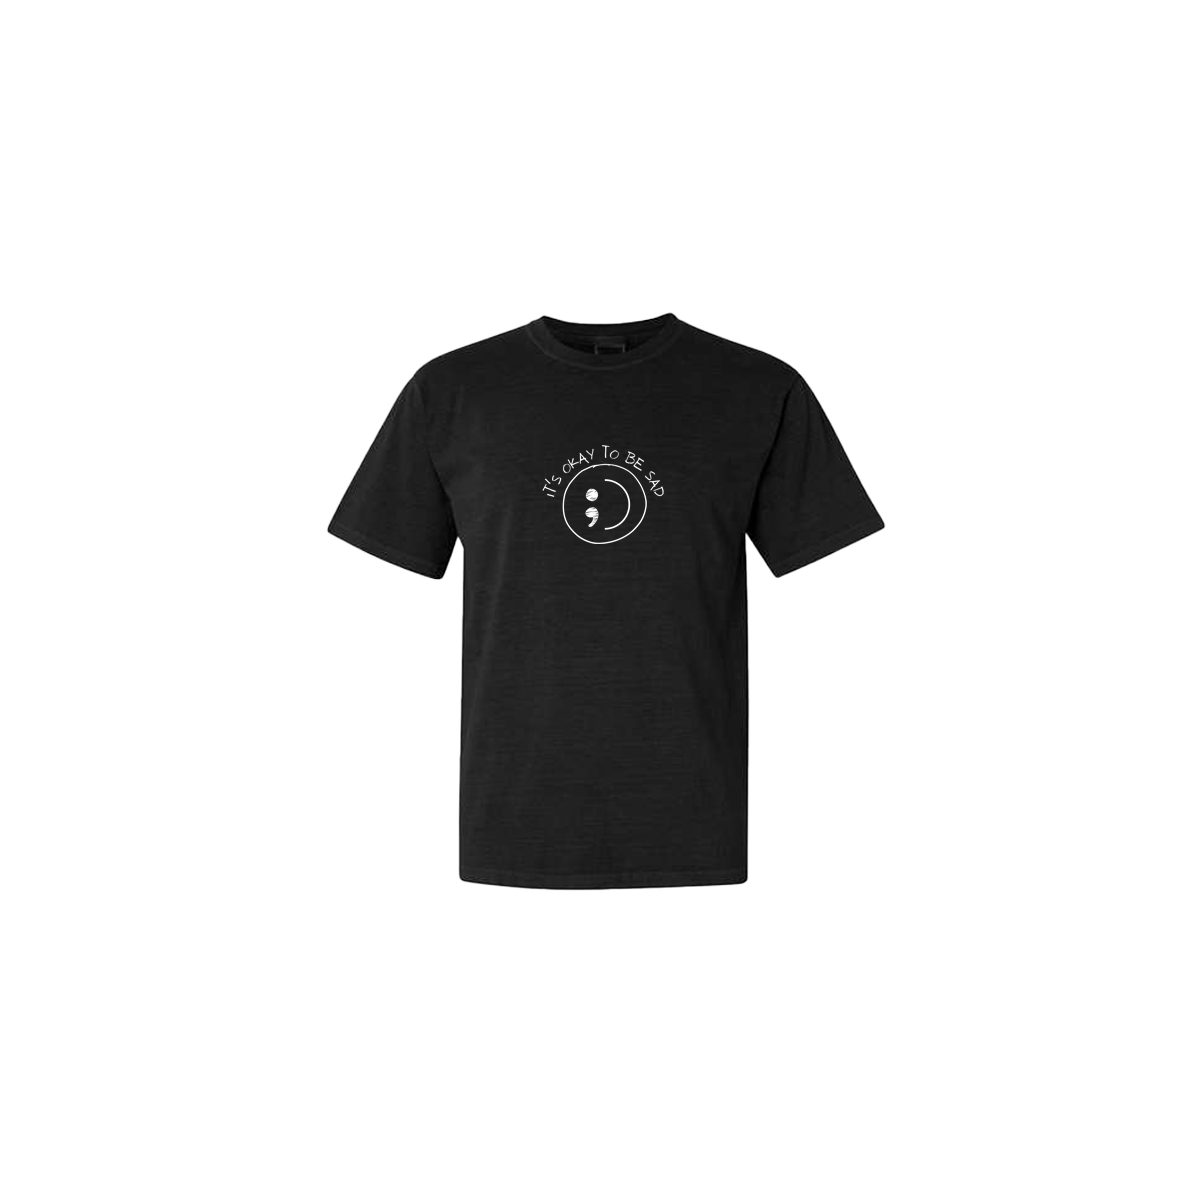 It's Okay to be Sad Embroidered Black Tshirt - Mental Health Awareness Clothing